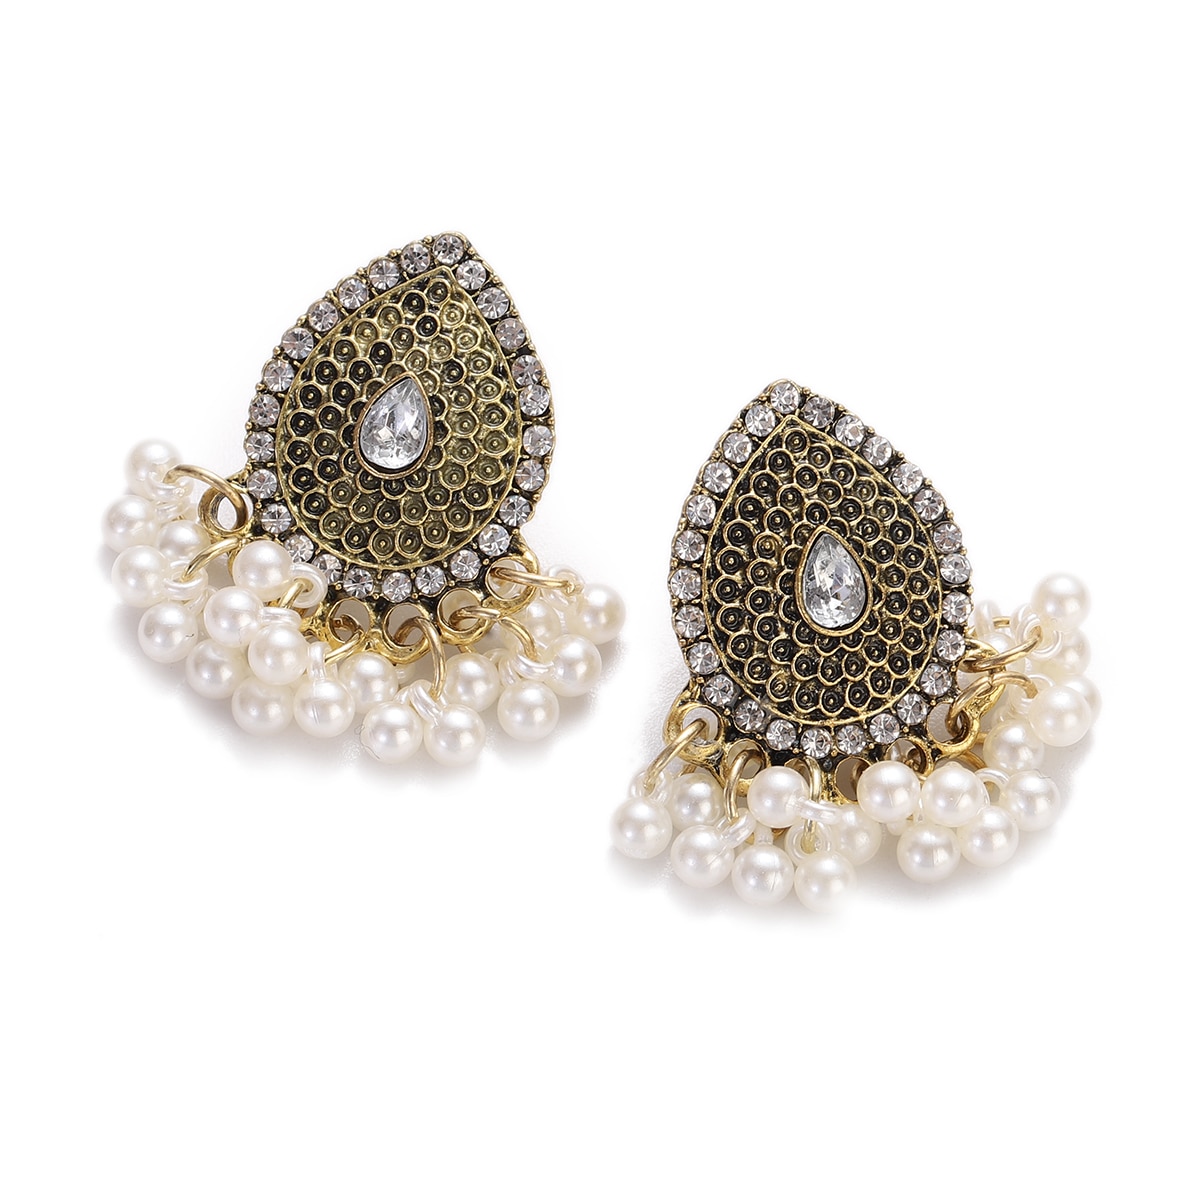 Luxury-White-CZ-Water-Drop-Earrings-For-Women-Ethnic-Vintage-Bohemian-Gold-Color-Statement-Earrings-1005004700736114-4